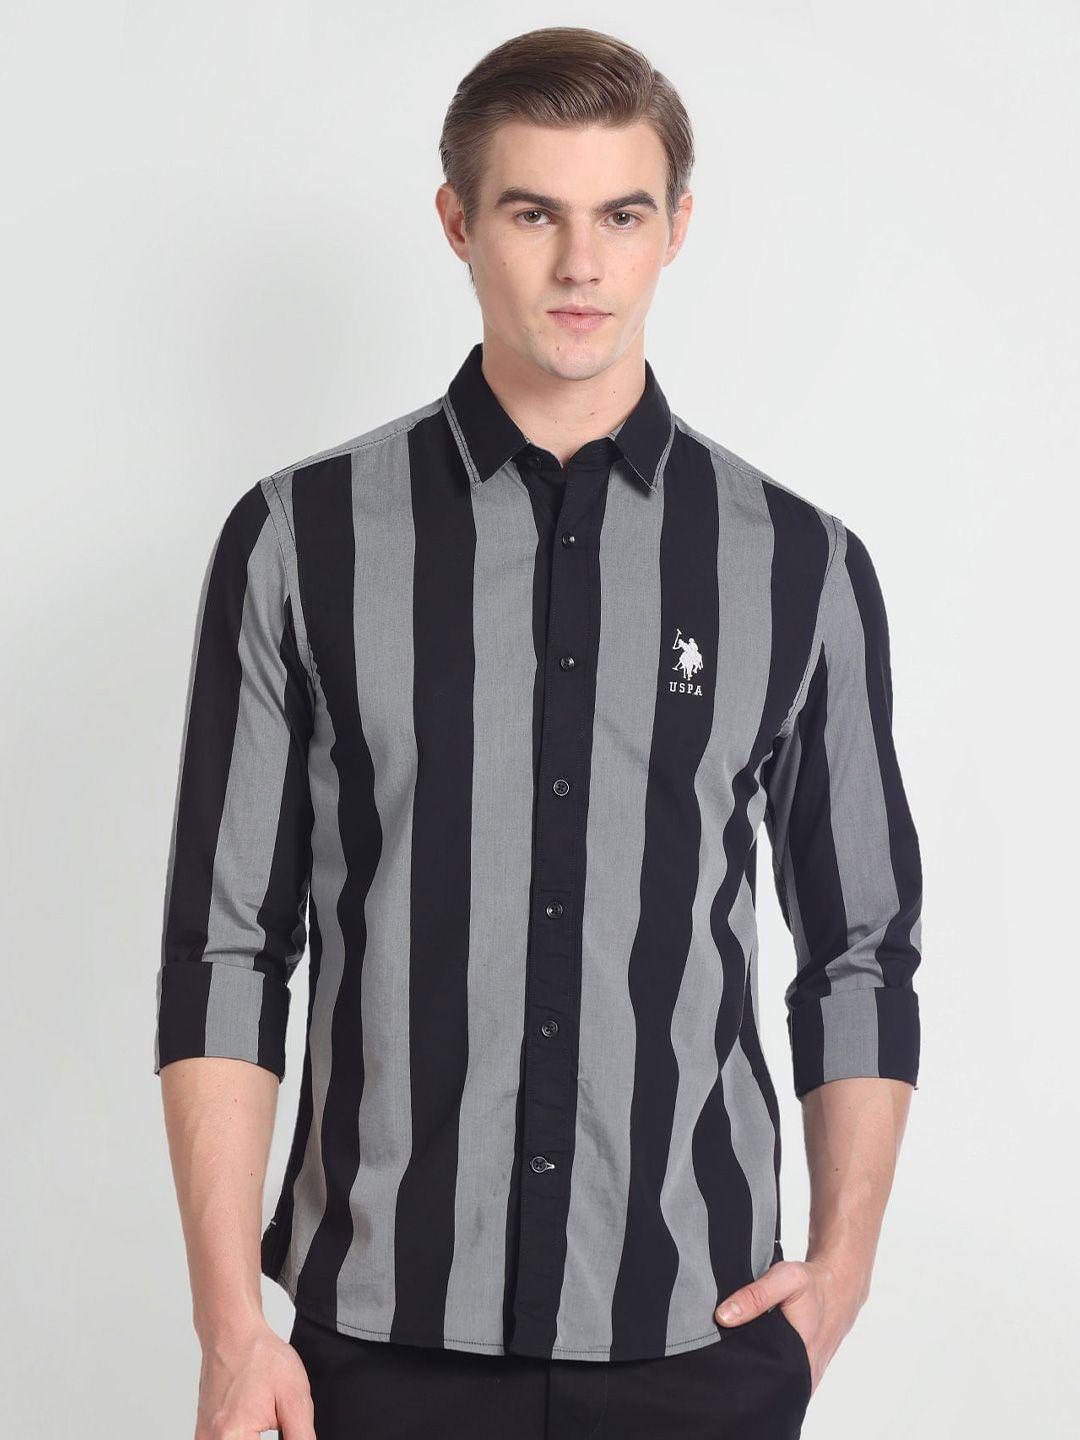 u.s. polo assn. denim co. slim fit vertical striped casual pure cotton shirt